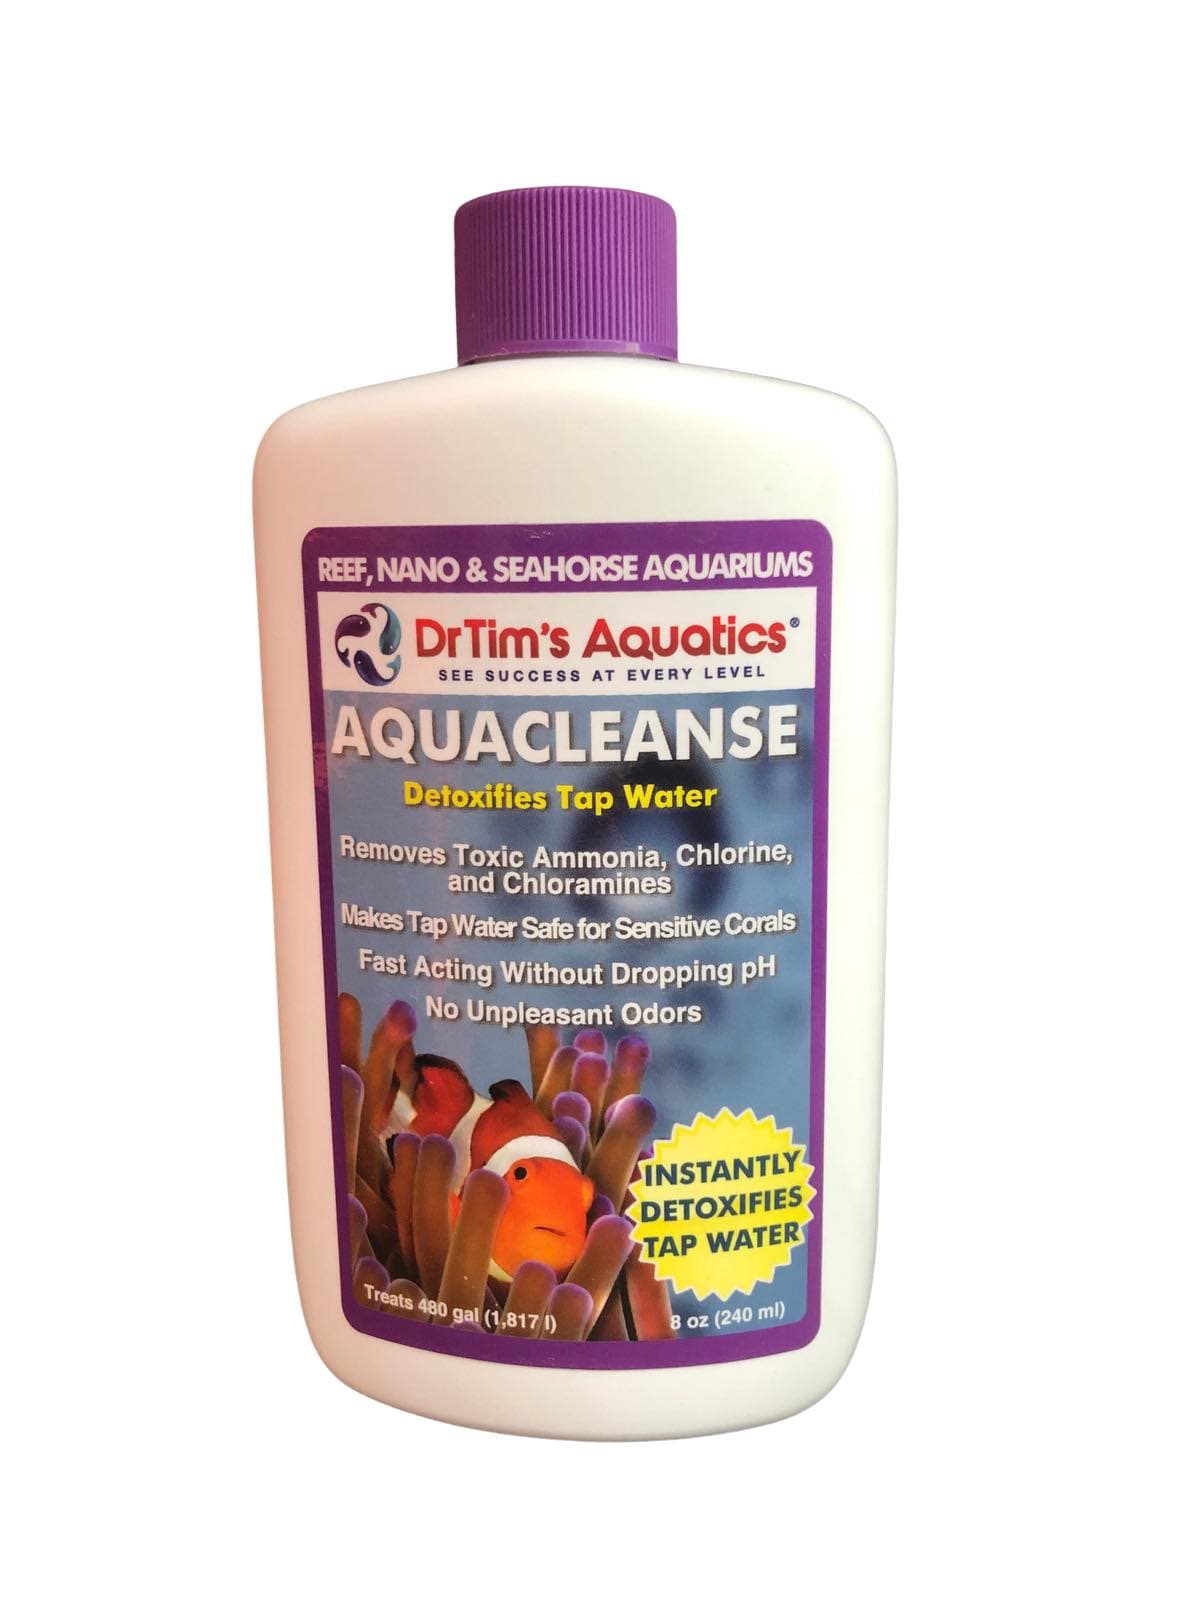 AquaCleanse - Dr Tim's